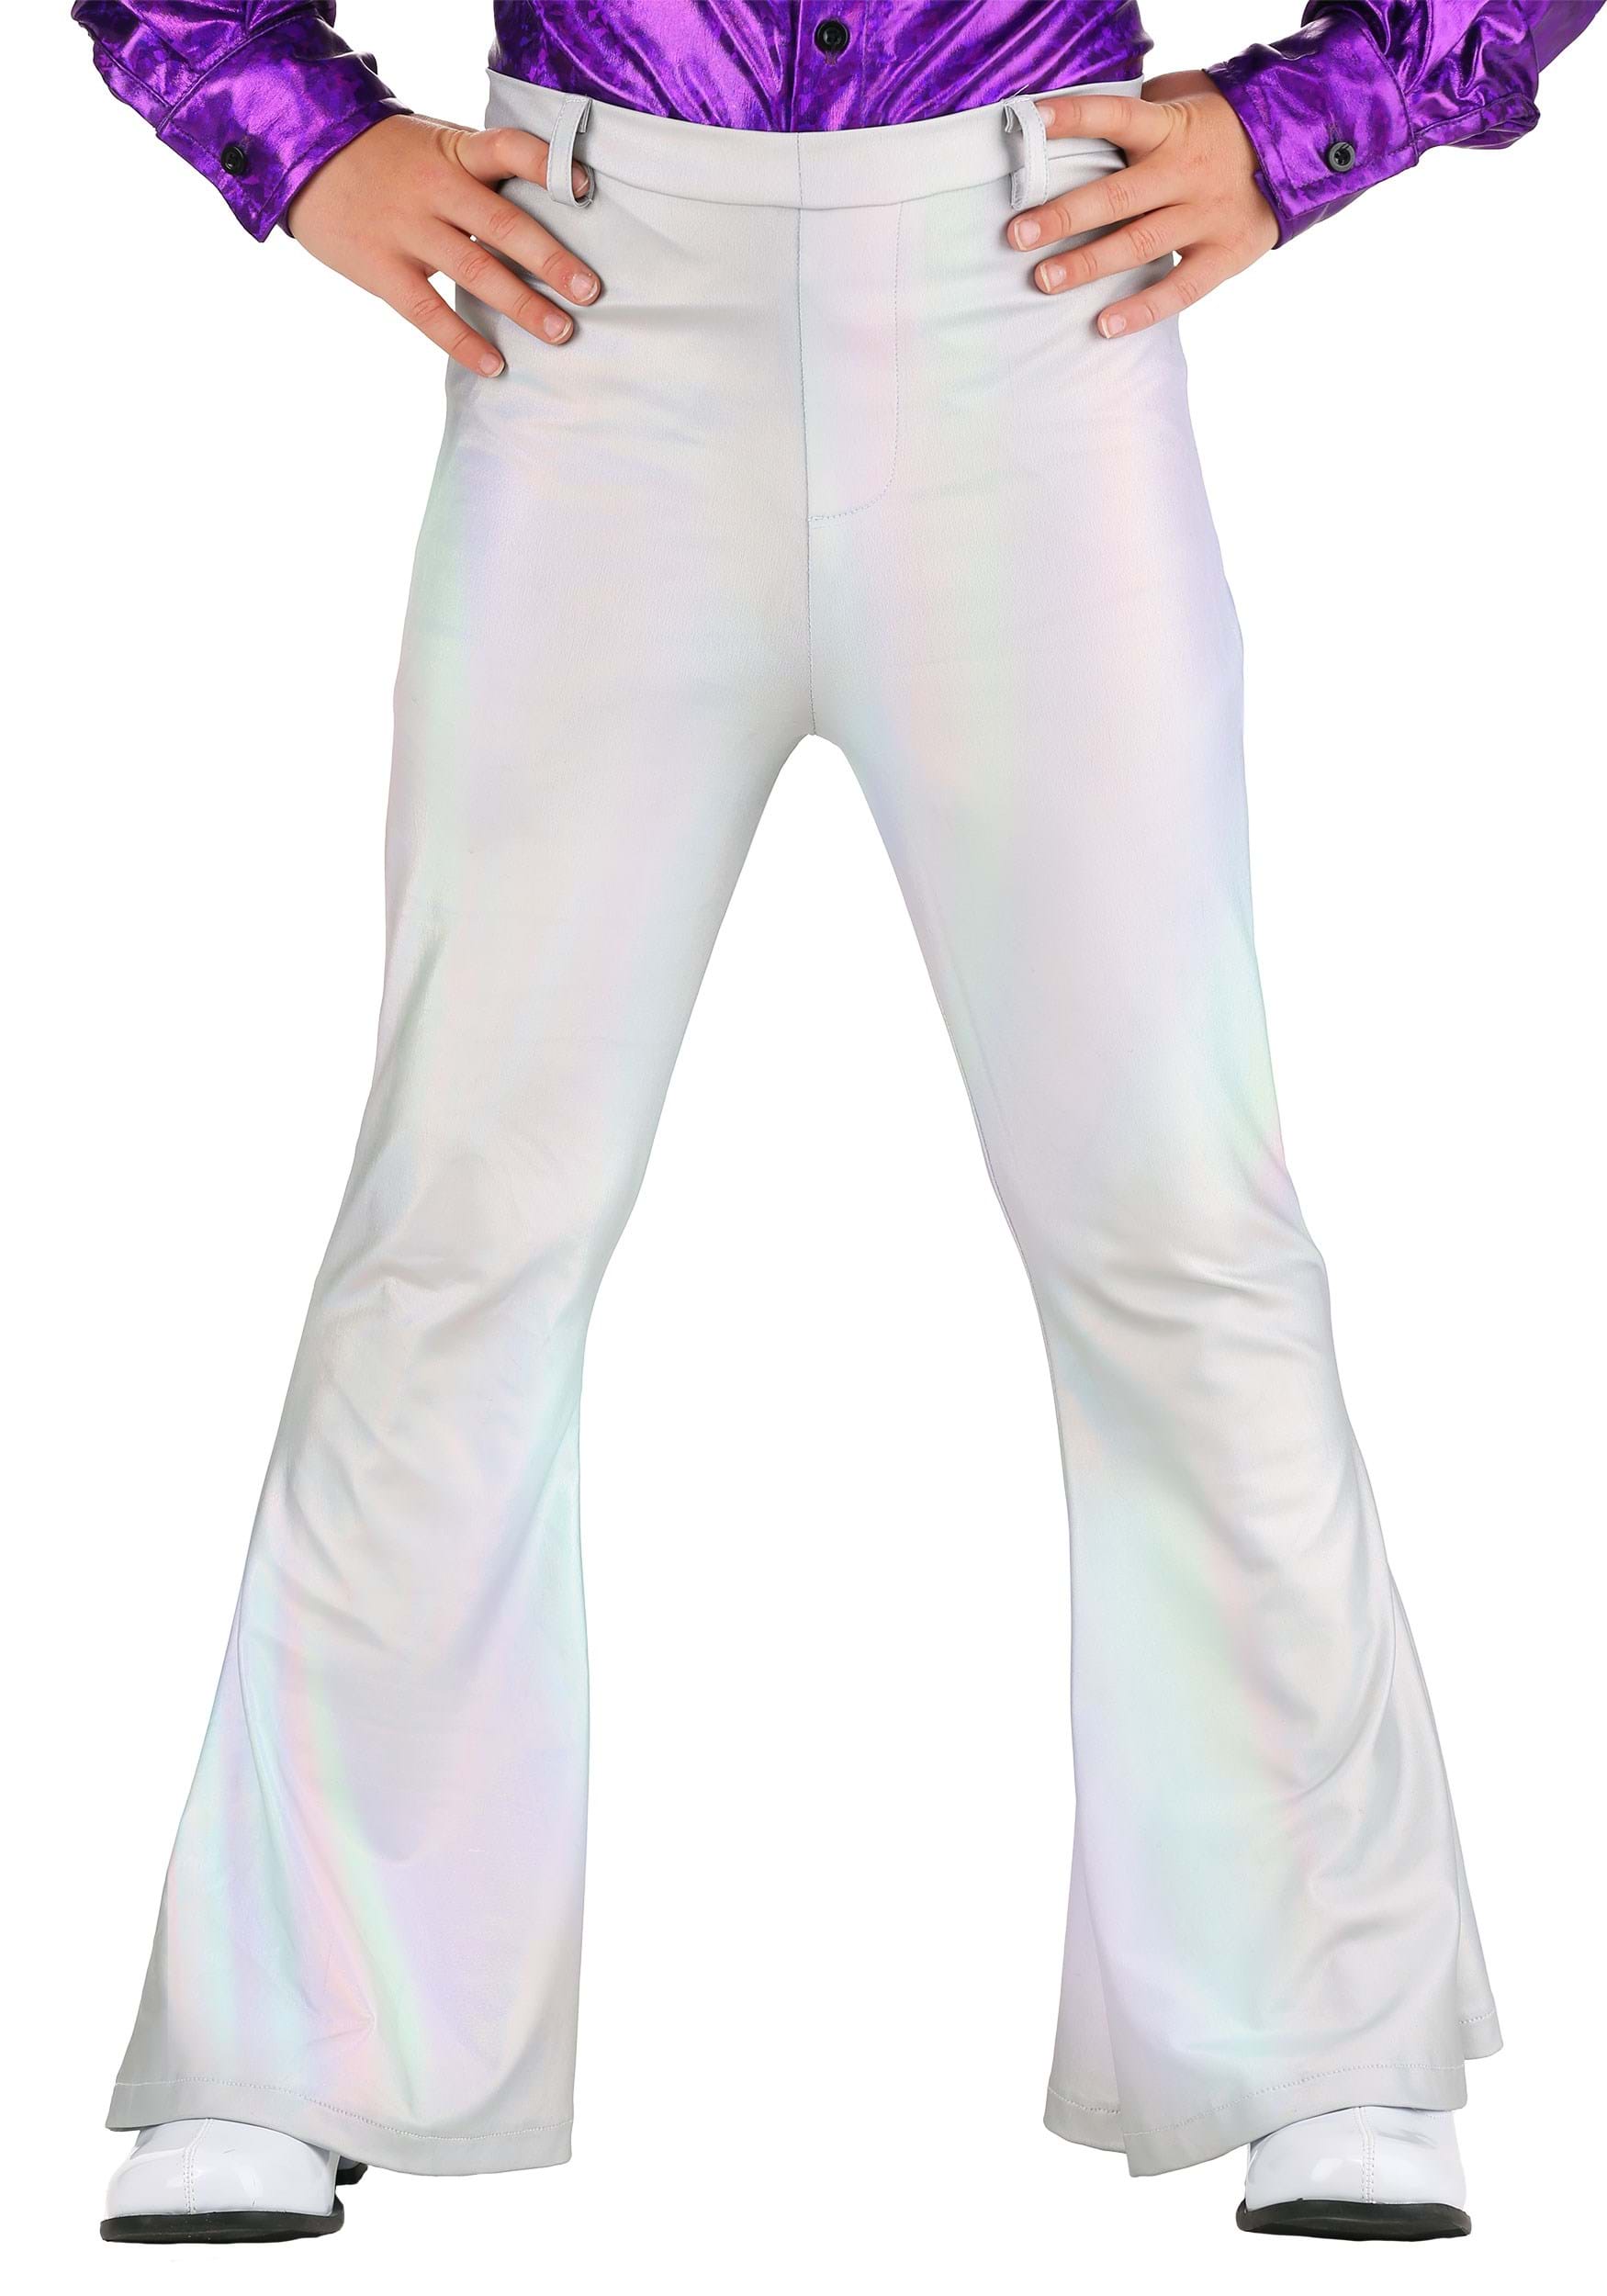 4 Pocket Disco Gold Flare Pants - Gold Disco Ball Men's